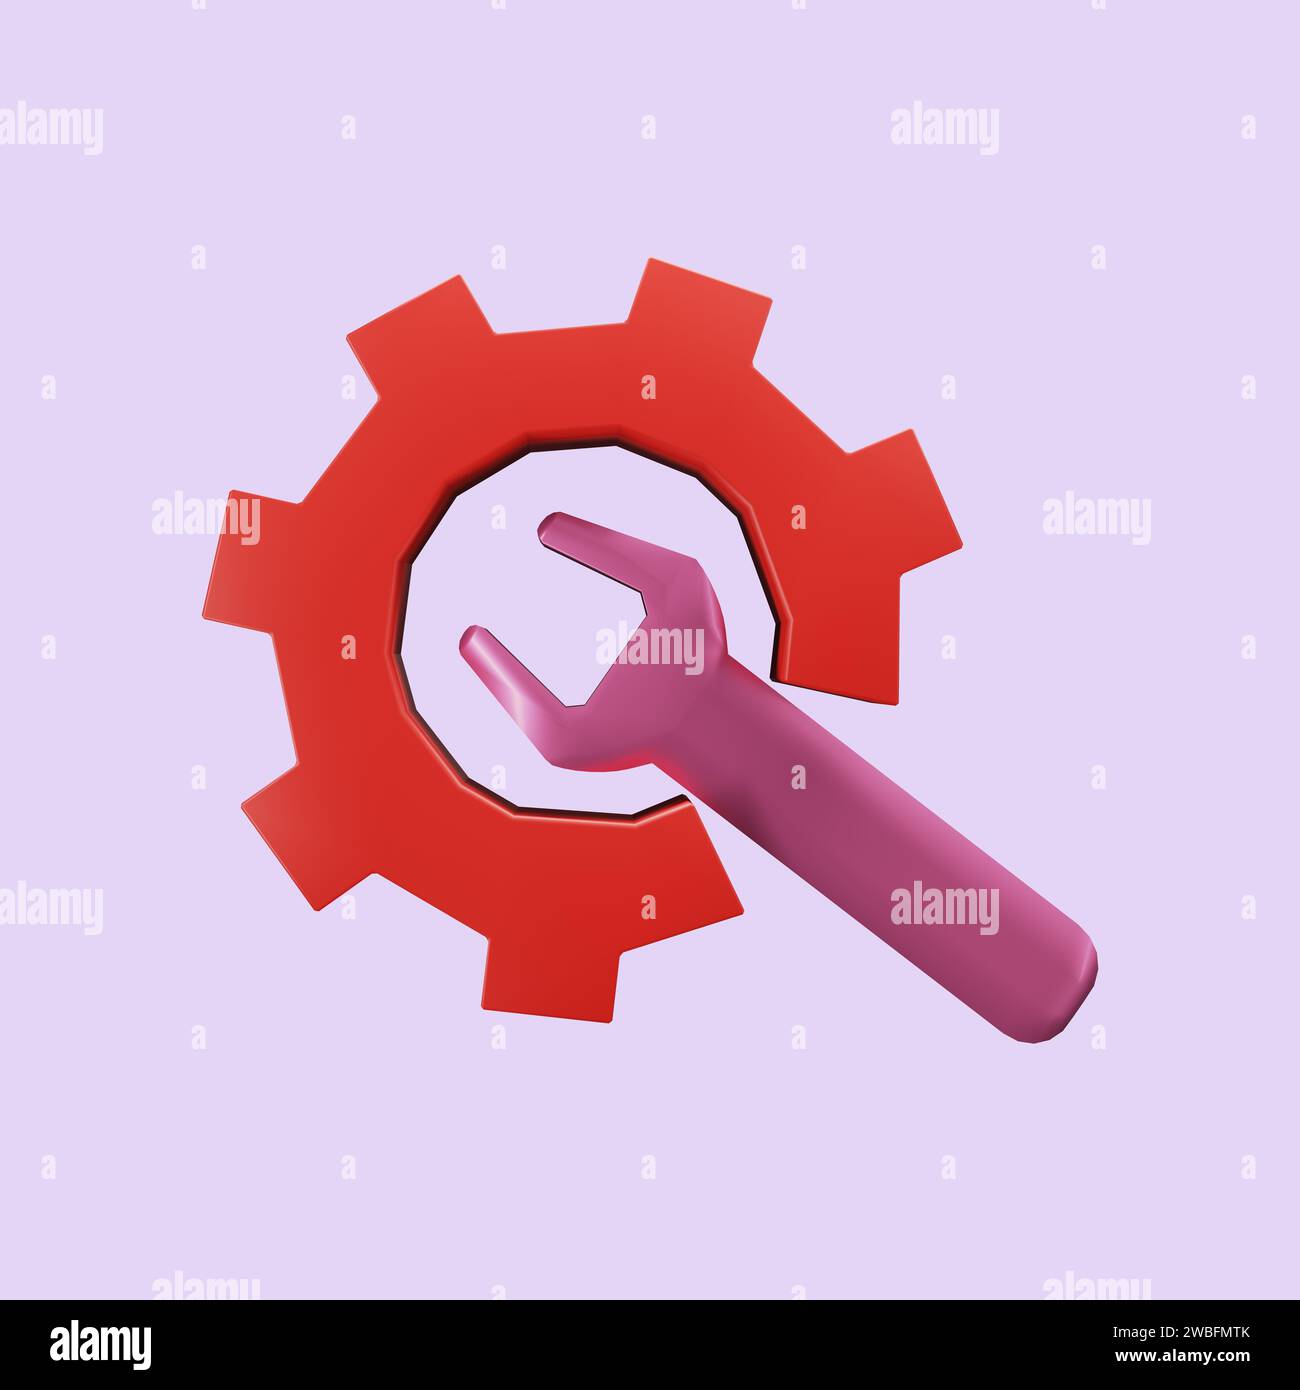 Icon of gears symbolizing settings and customization. Stock Photo